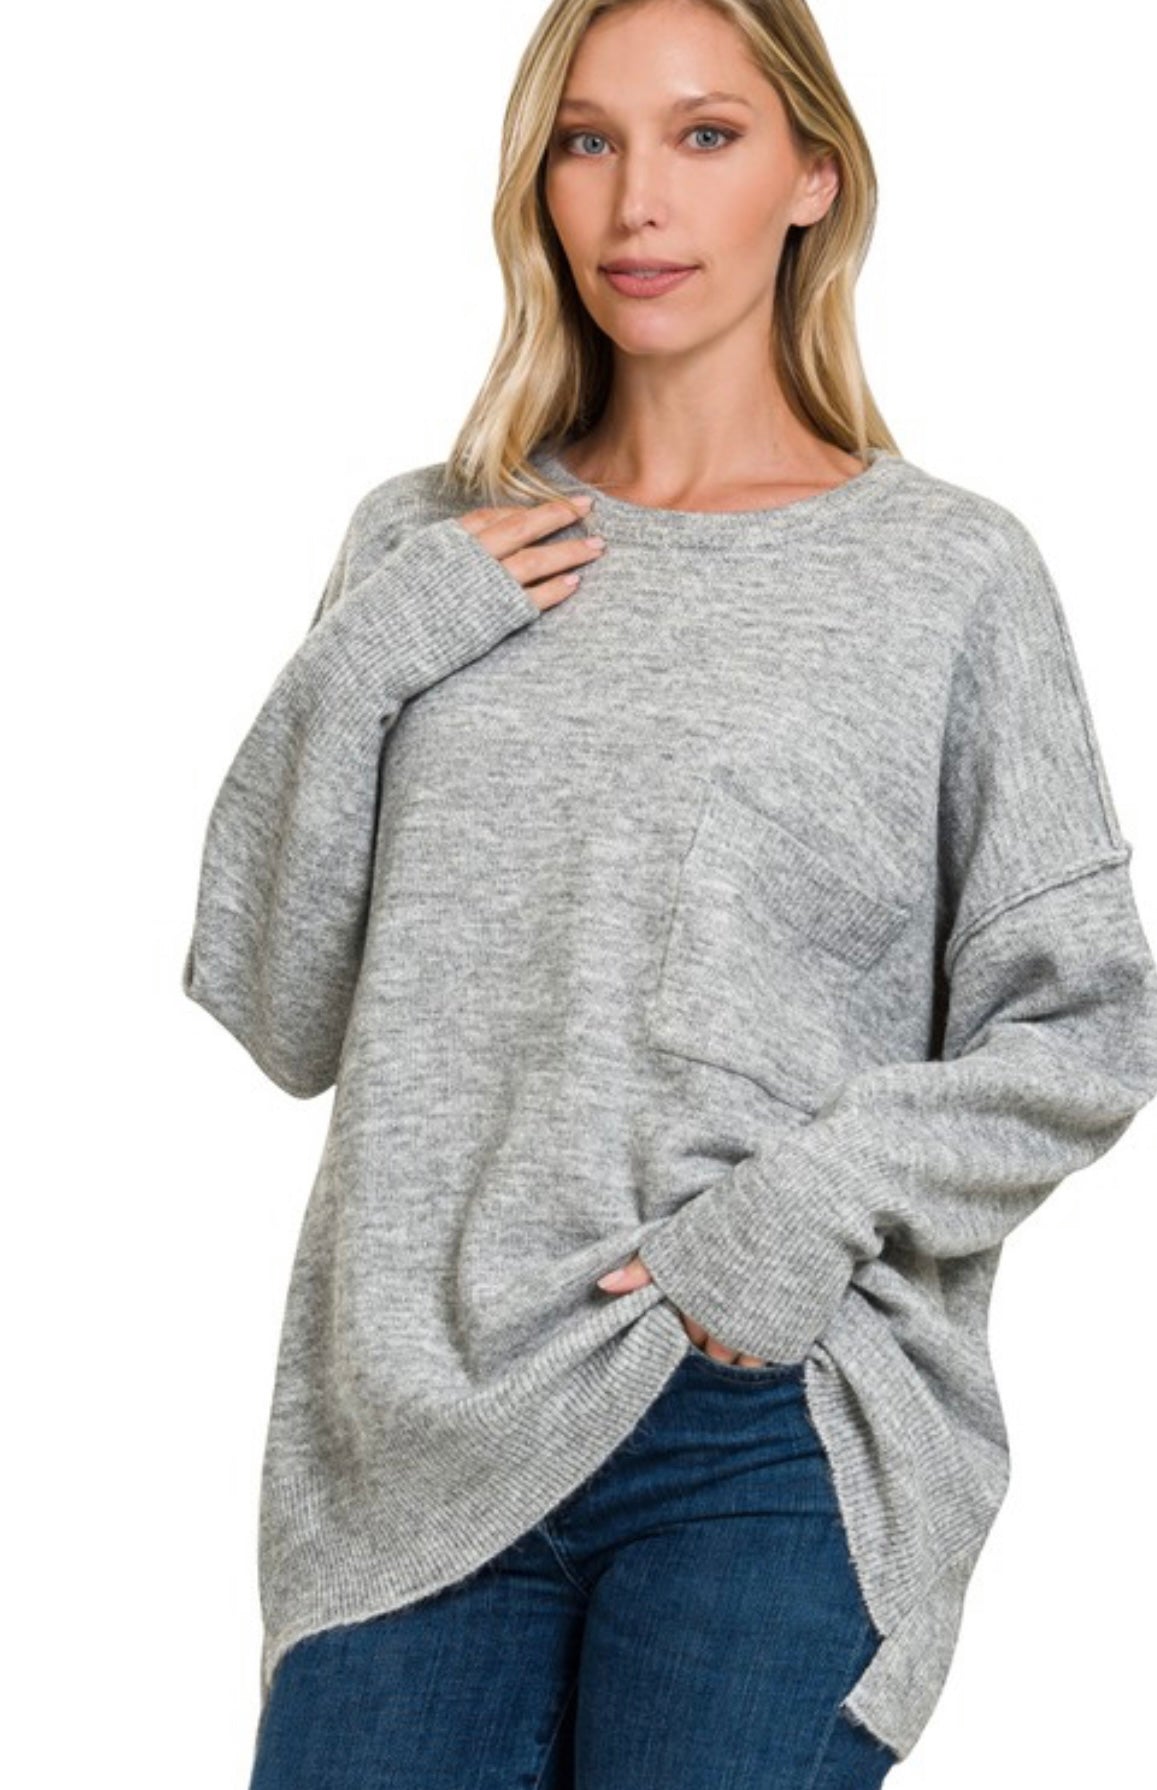 Livin lazy cozy sweater in Heather gray PREORDER ETA 10/27